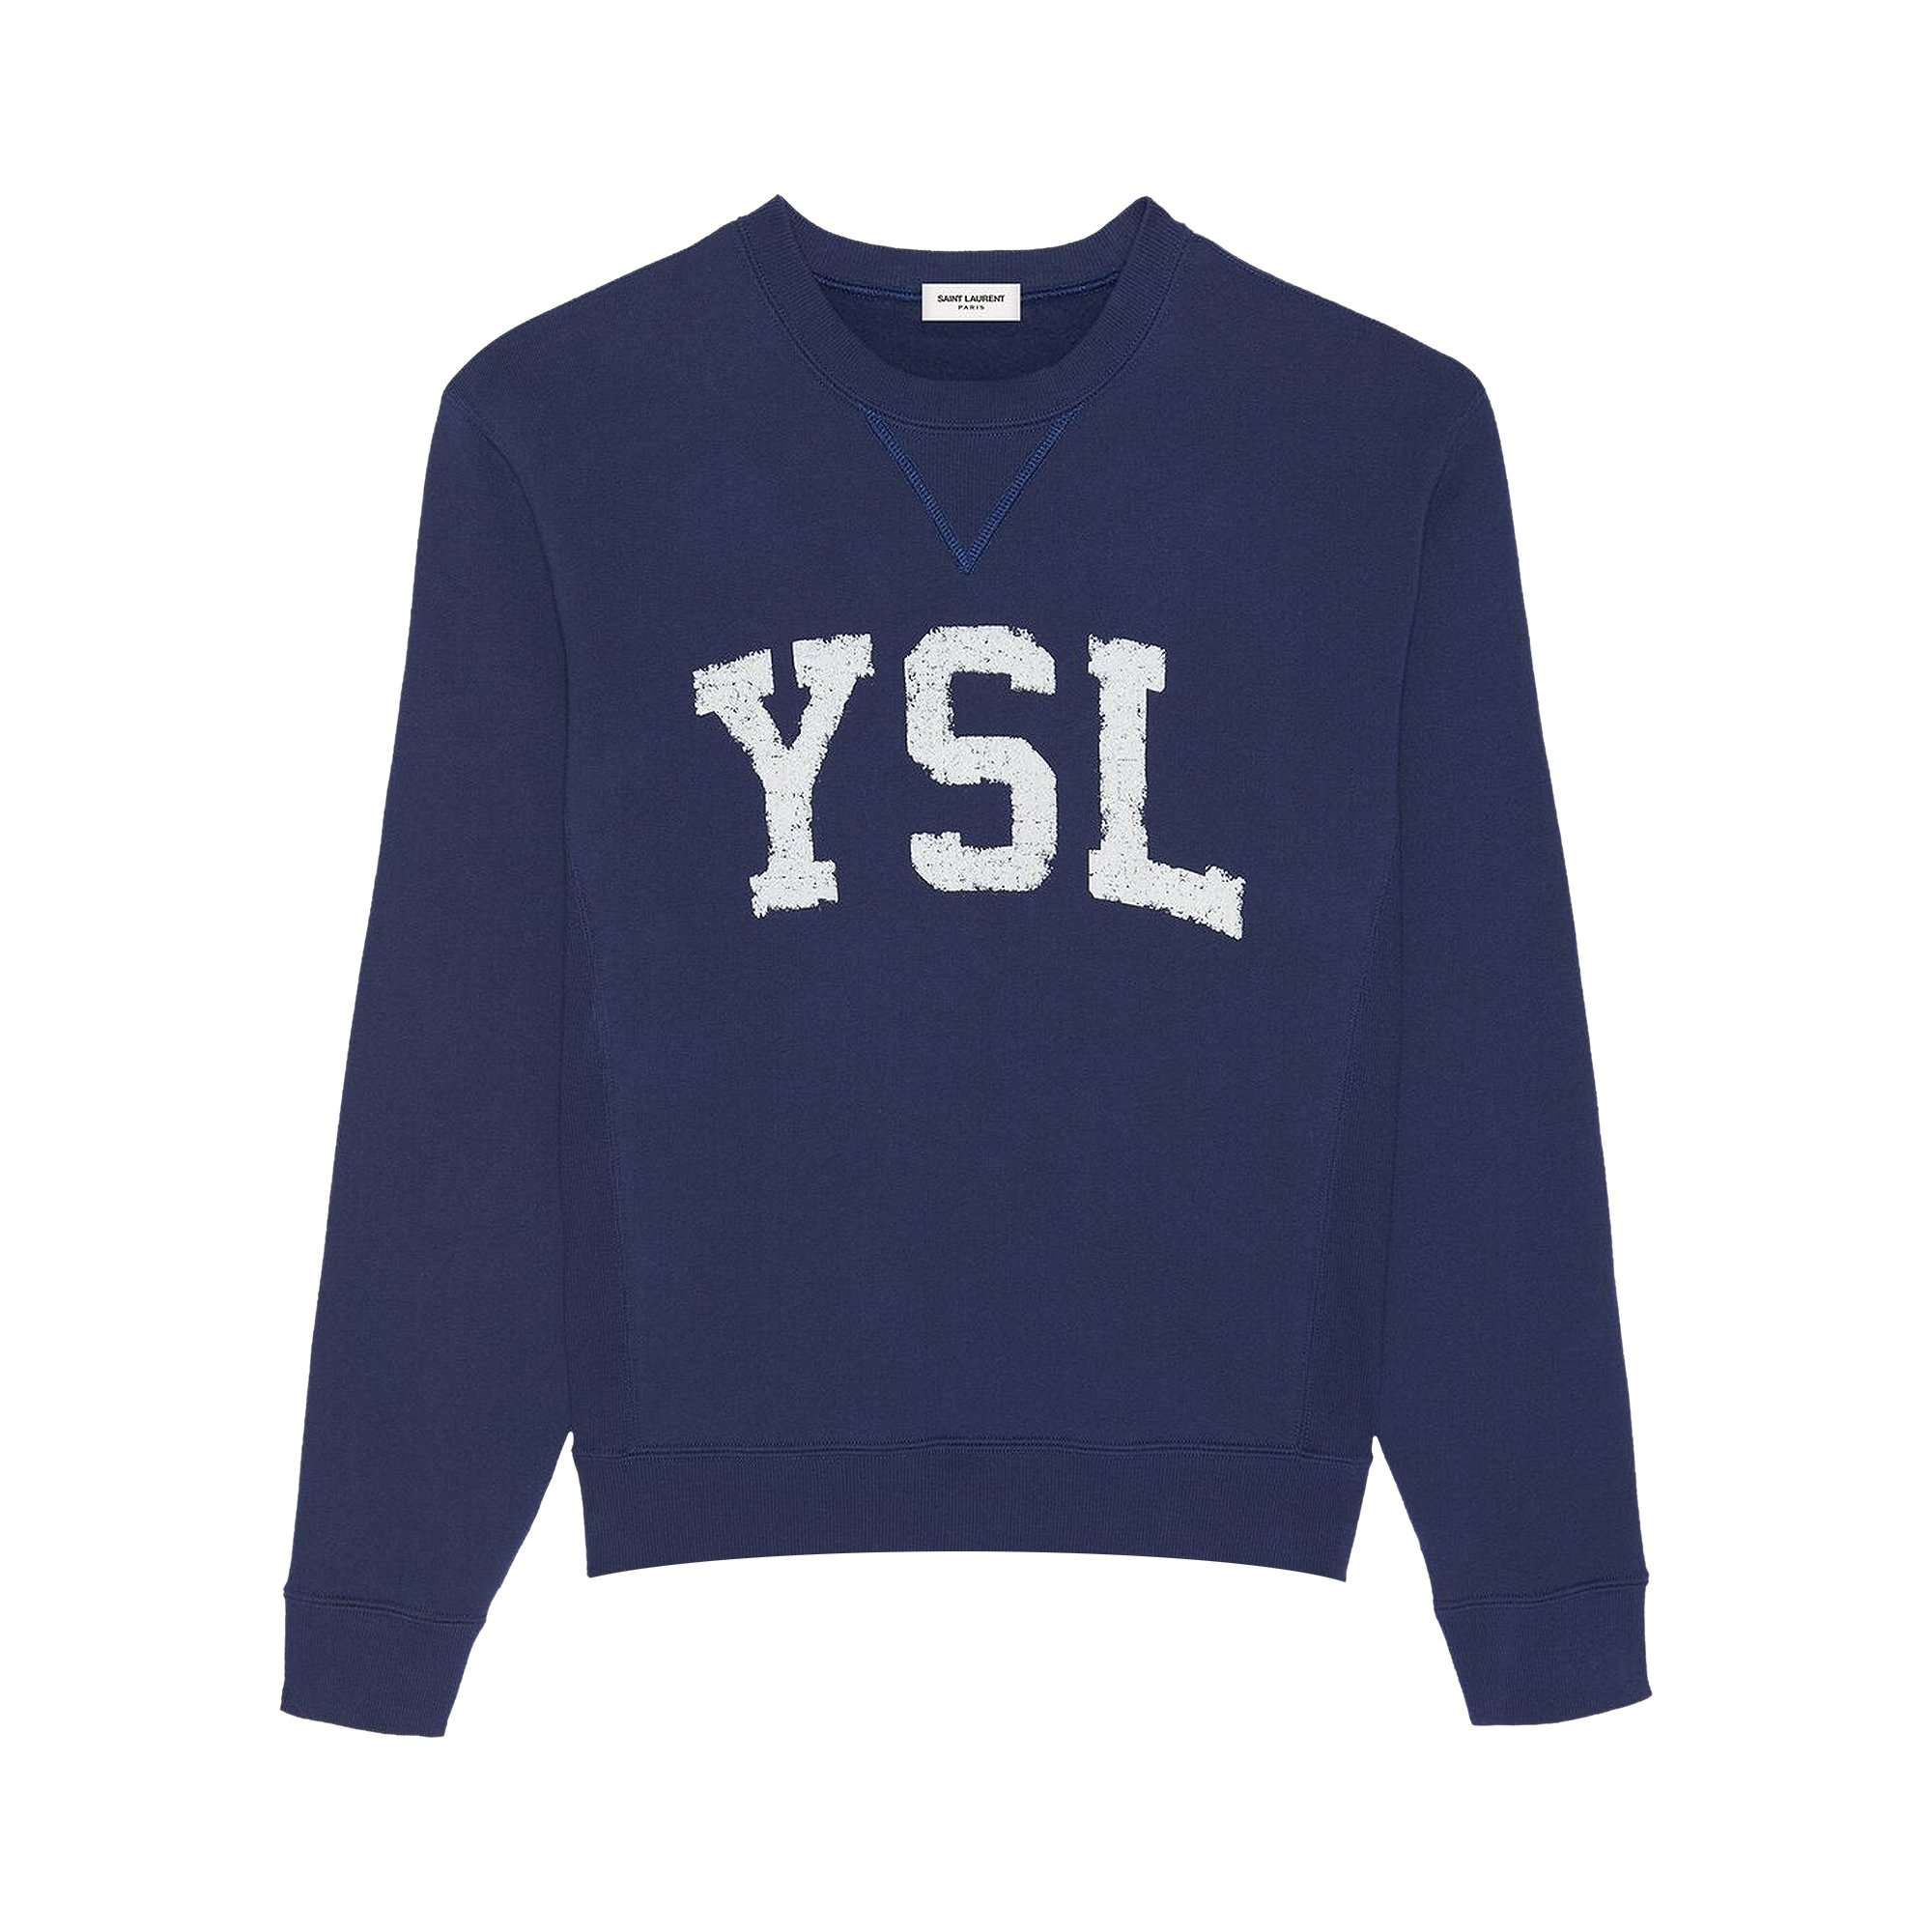 Buy Saint Laurent YSL Sweatshirt 'Faded Navy' - 666979 Y36IP 4201 